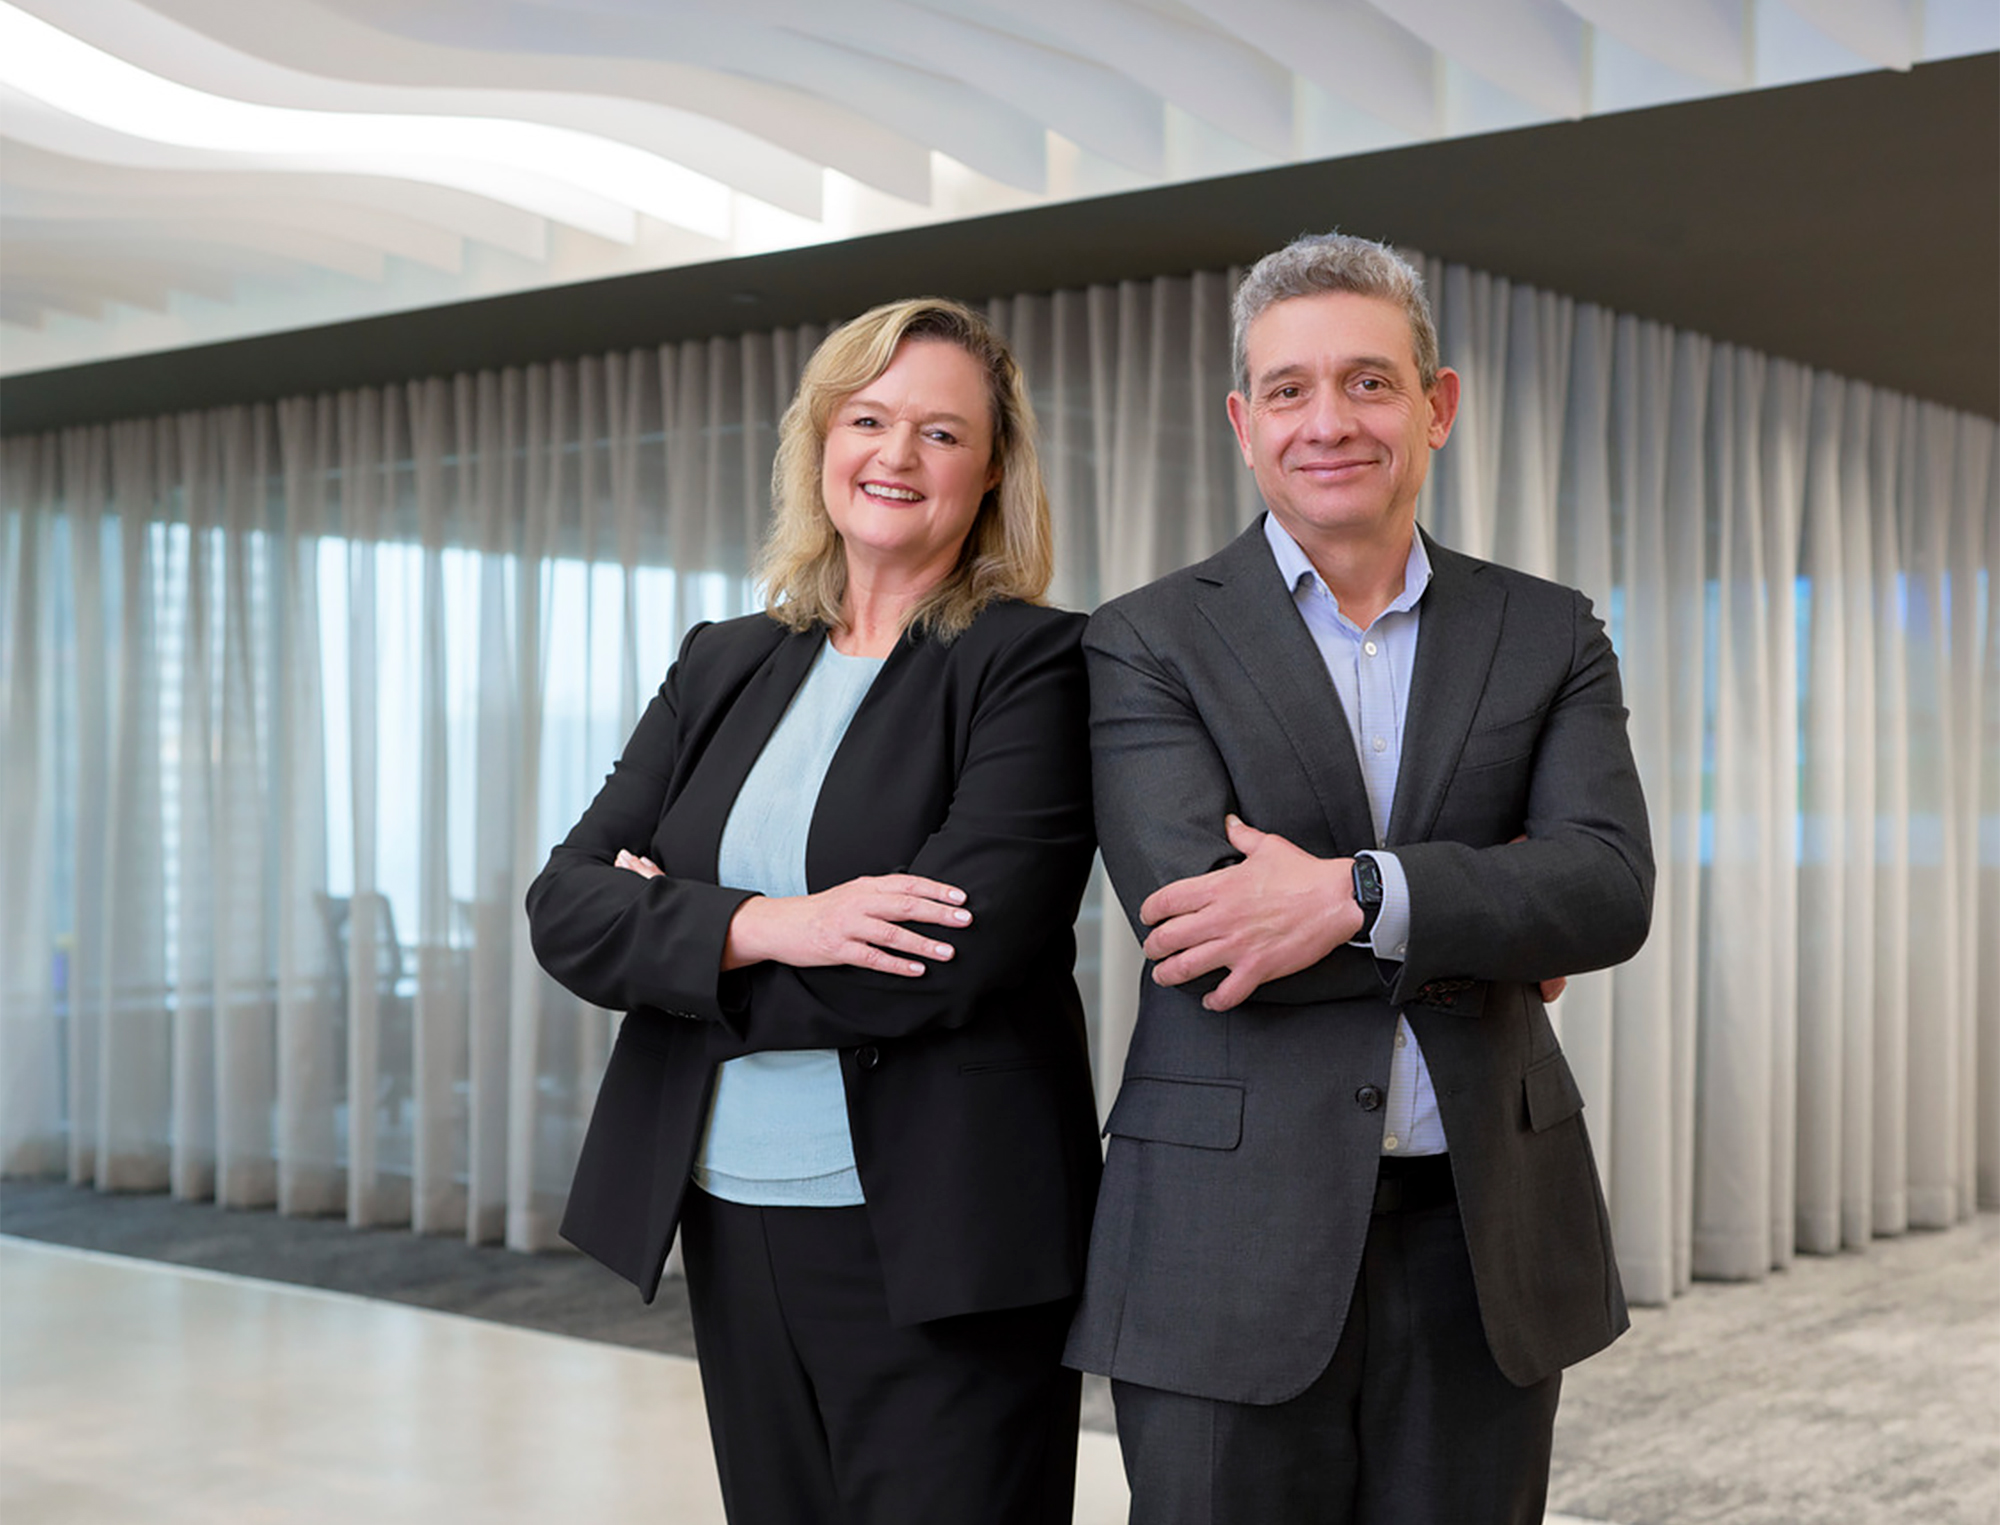 Co-CEOs headshot in modern building